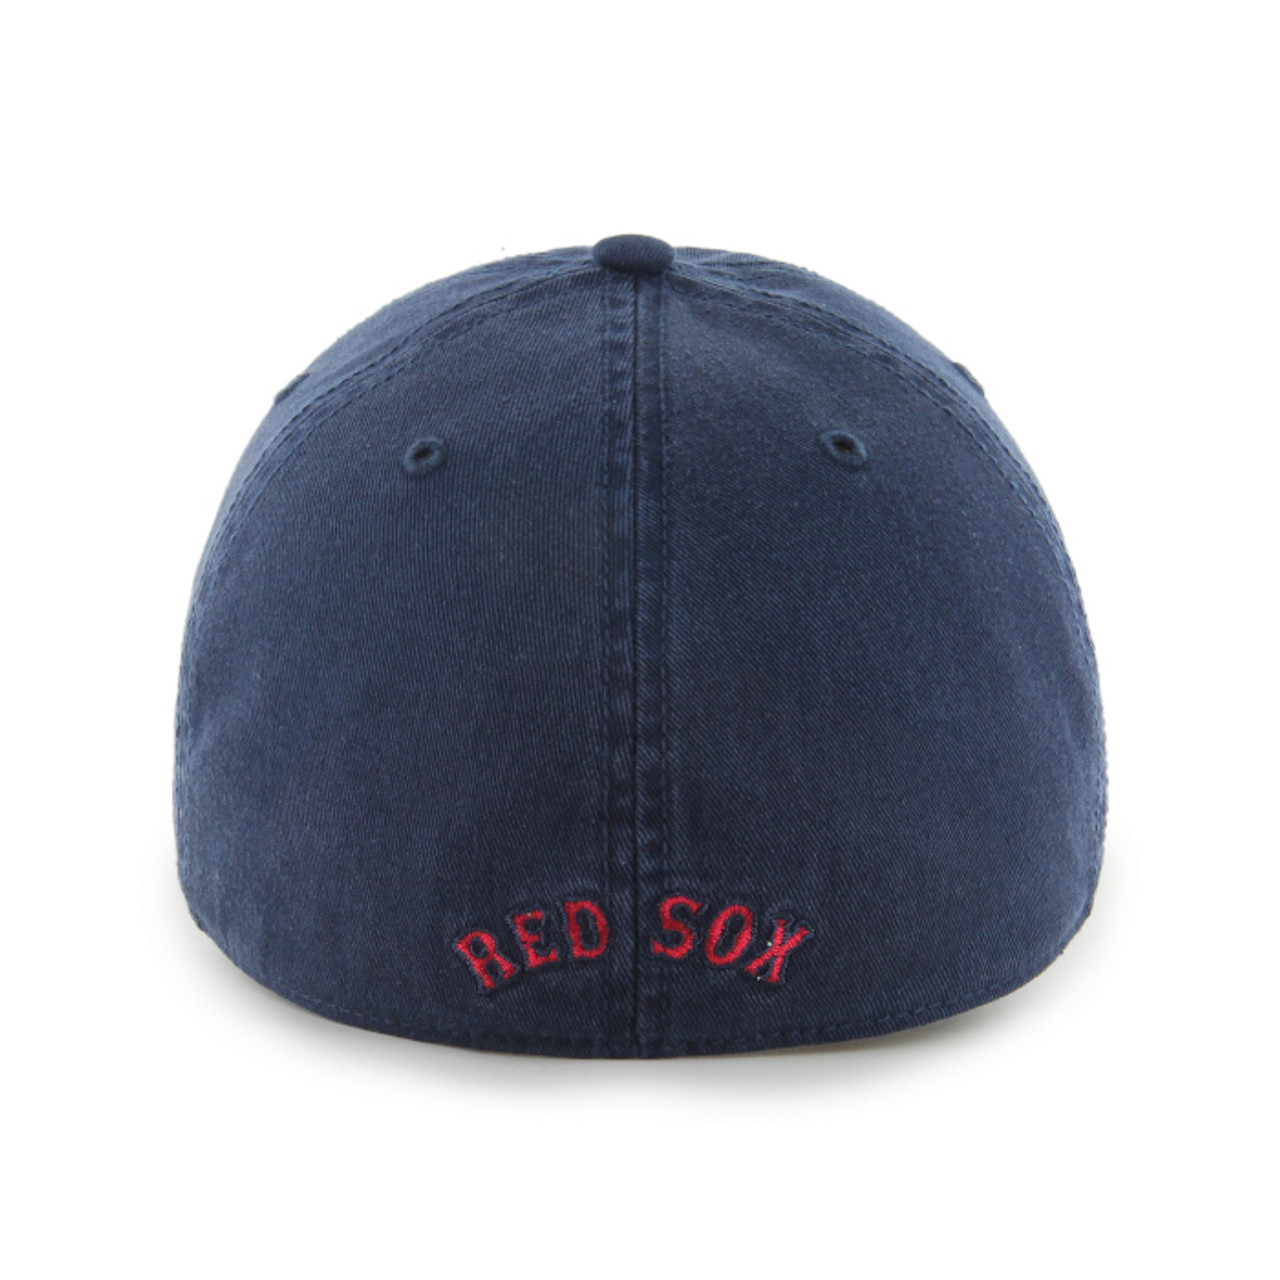 Men's '47 Brand Boston Red Sox Navy Franchise Cap